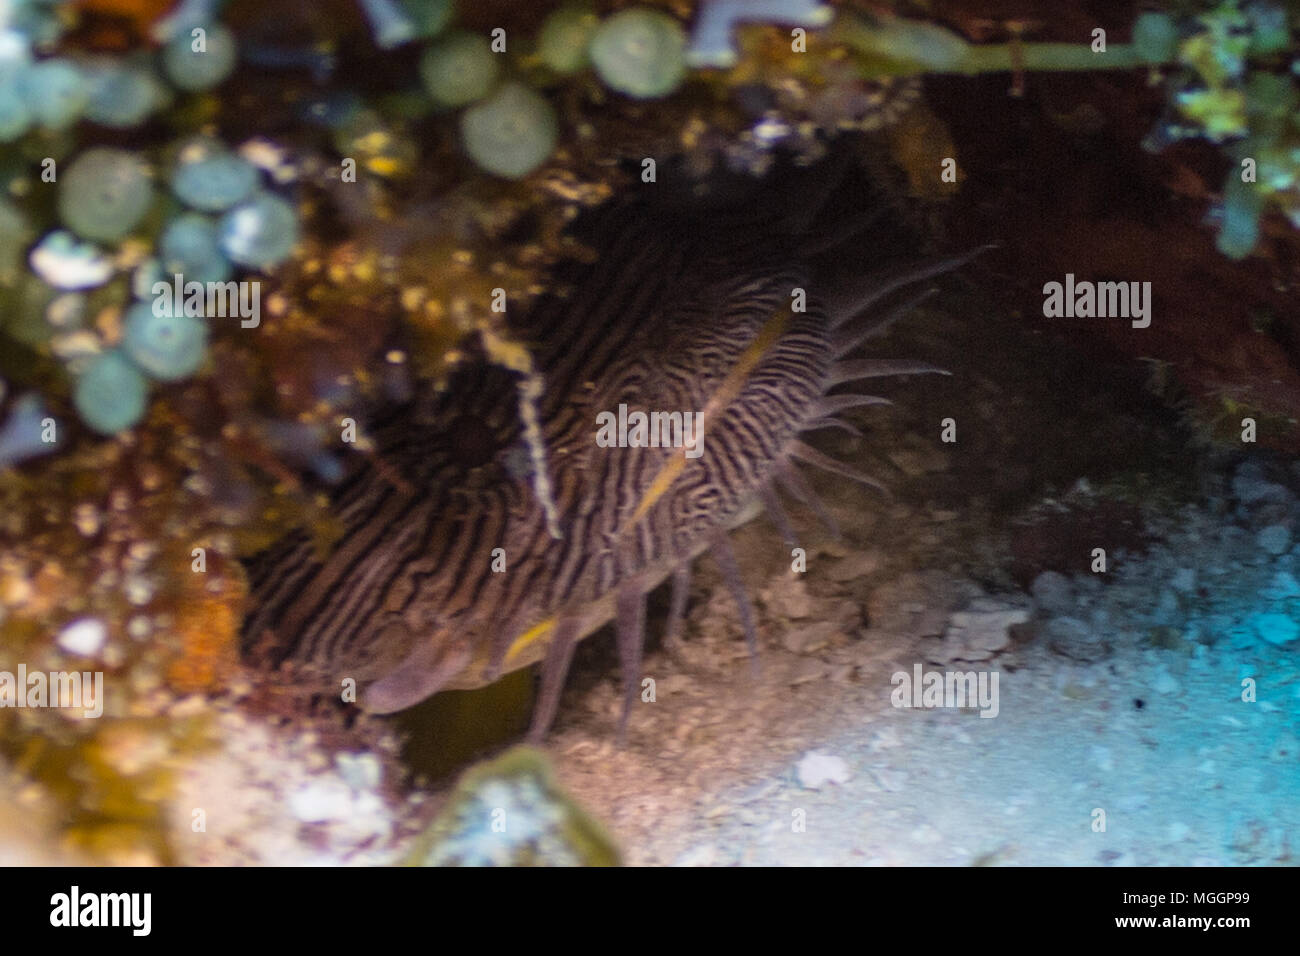 Cozumel Underwater Photography Stock Photo